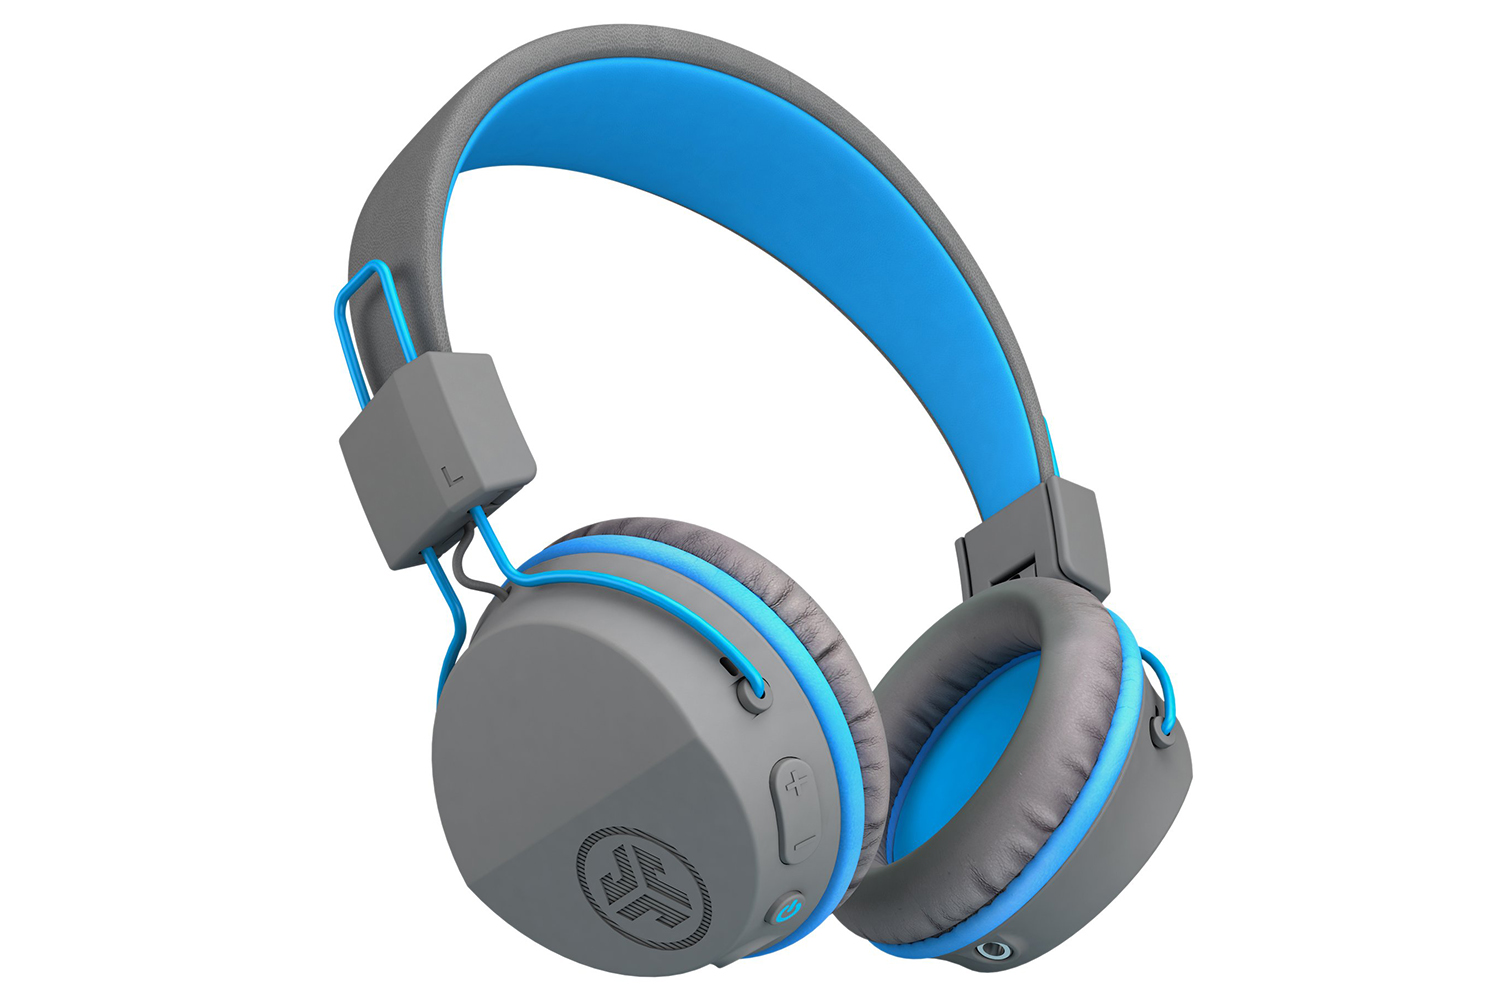 jlab jbuddies wireless bluetooth headphones